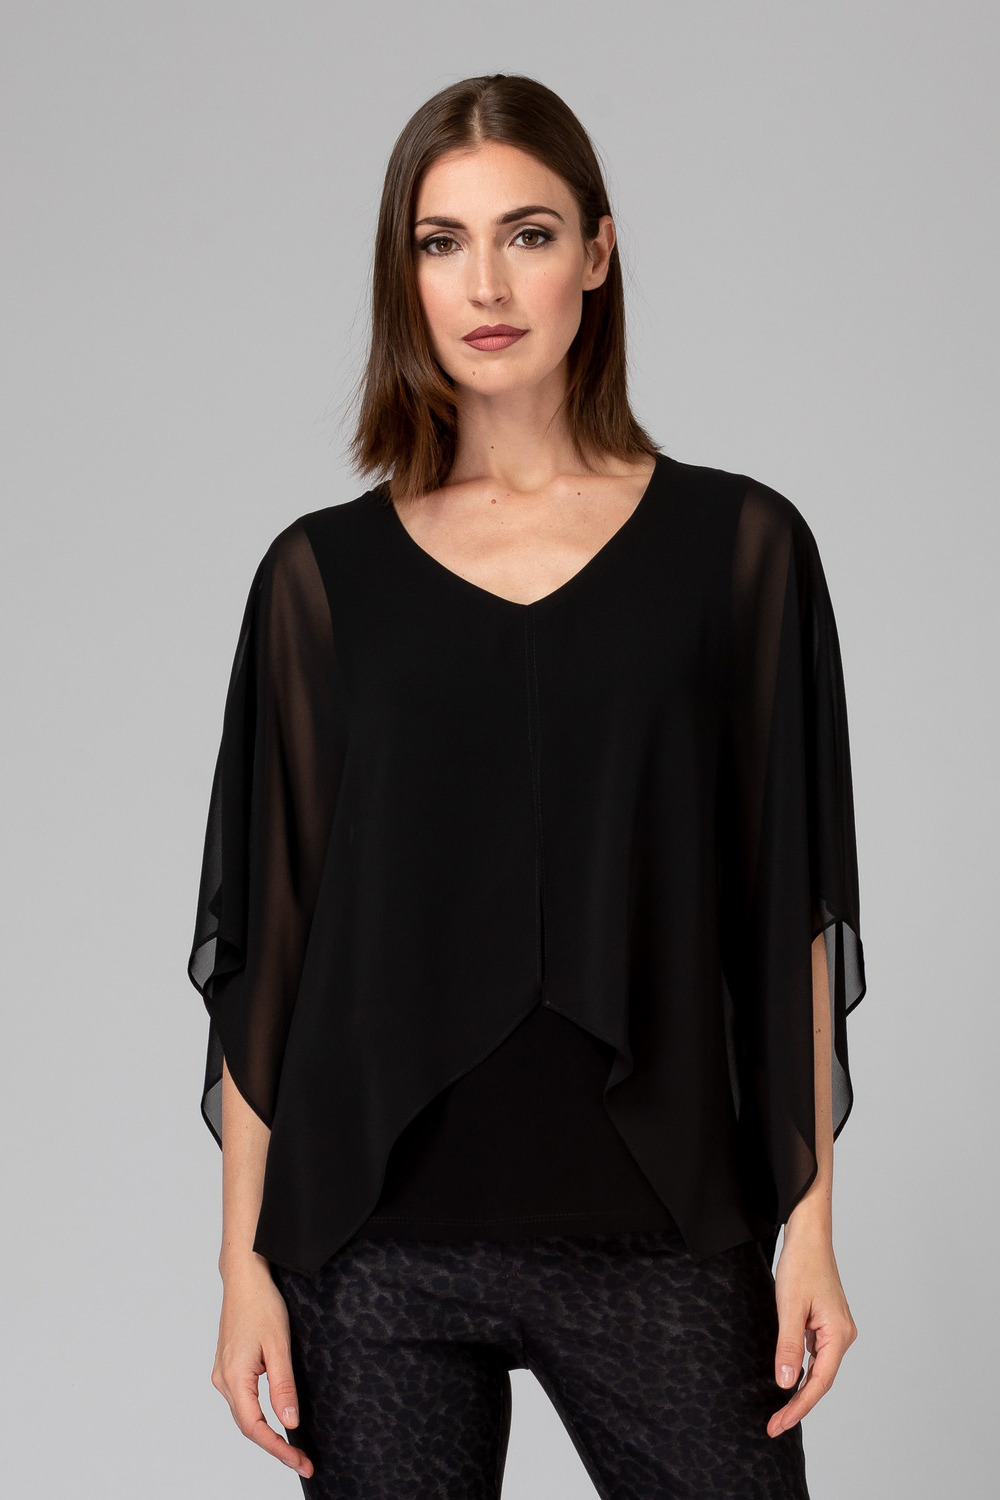 Joseph Ribkoff blouse style 194231. Black